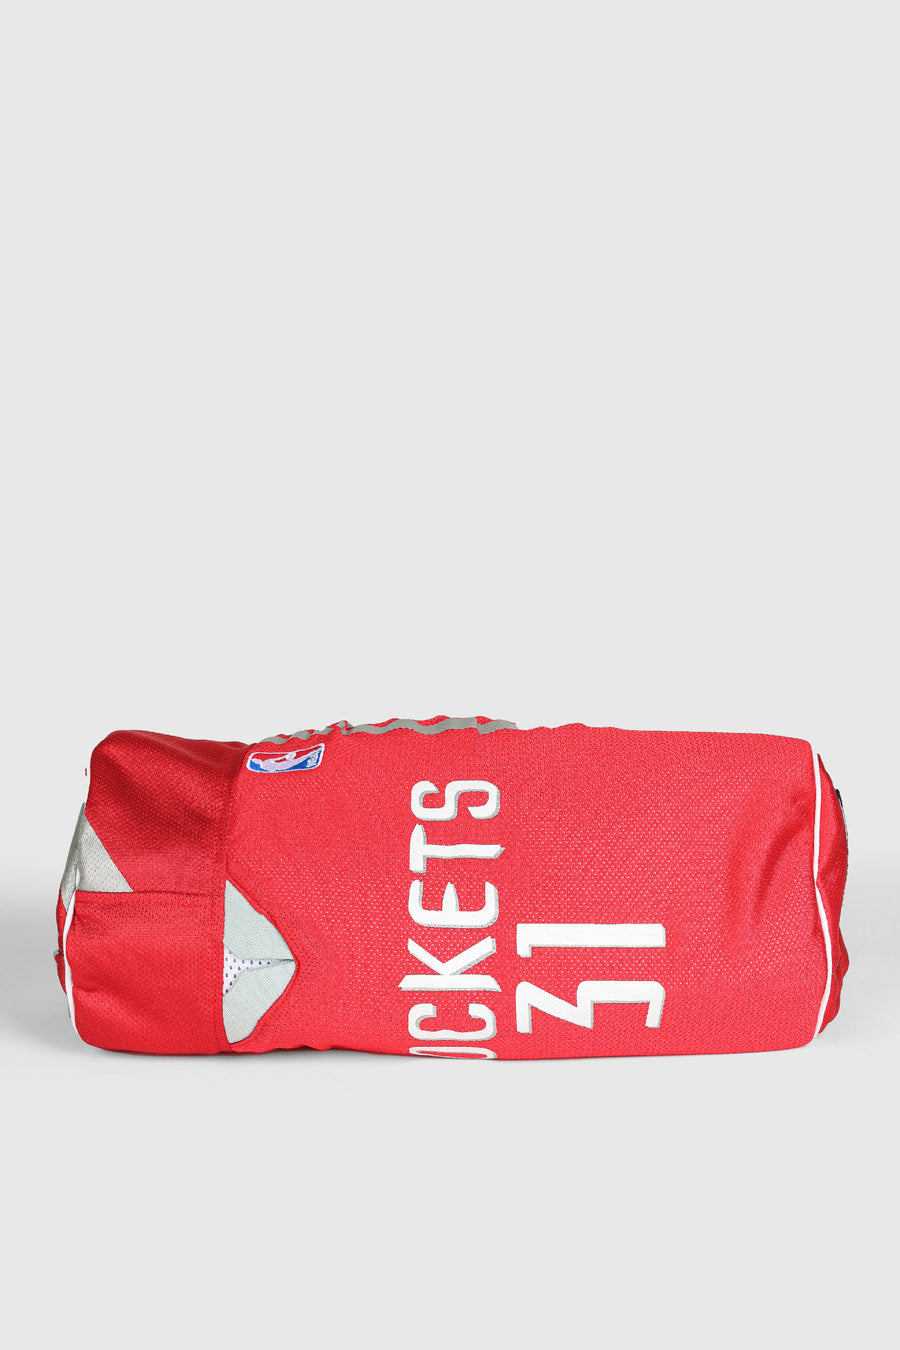 Rework Rockets NBA Duffle Bag